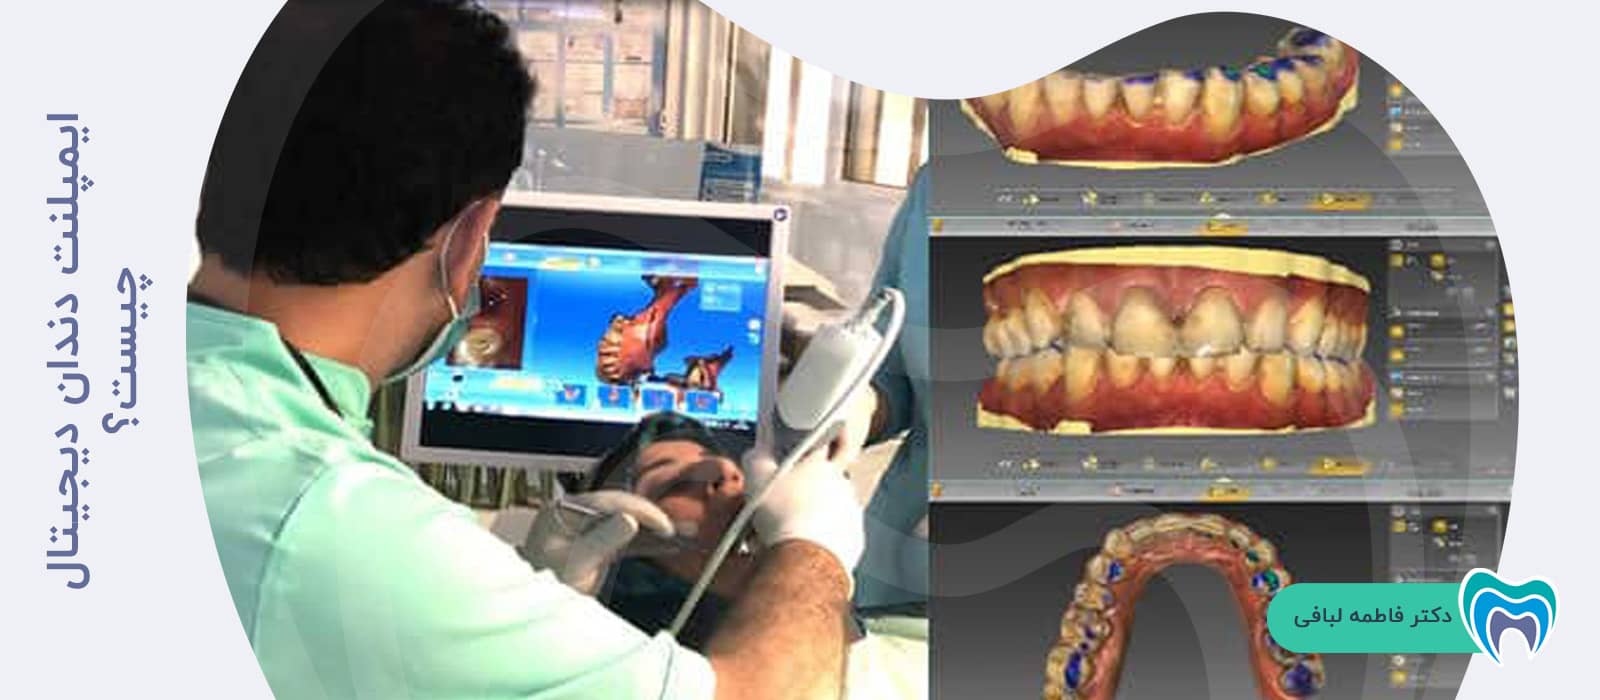 ایمپلنت دندان دیجیتال چیست؟